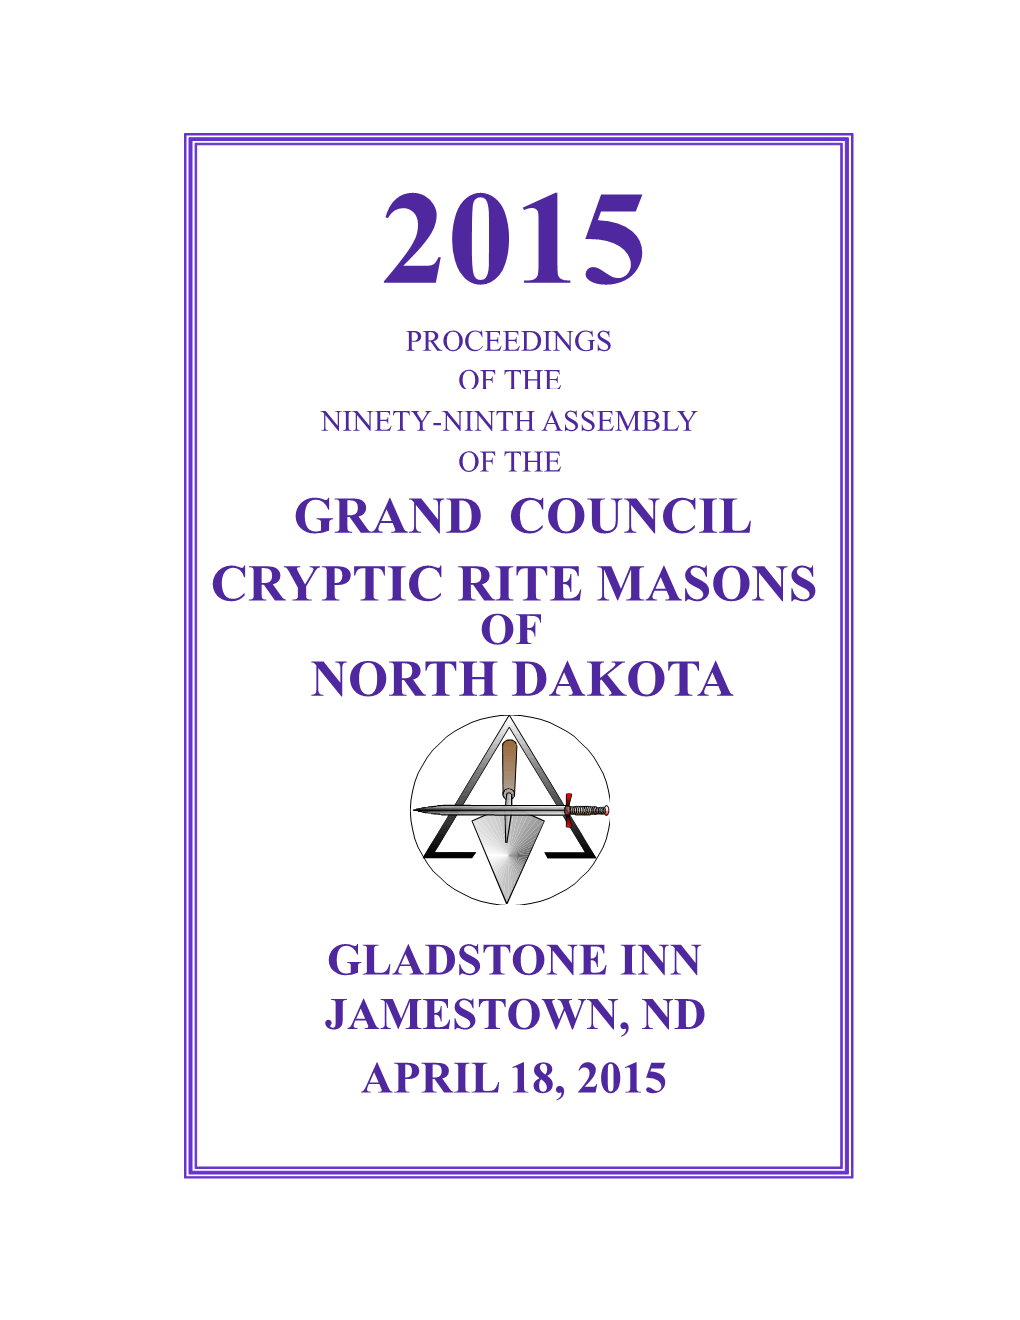 Grand Council Cryptic Rite Masons North Dakota